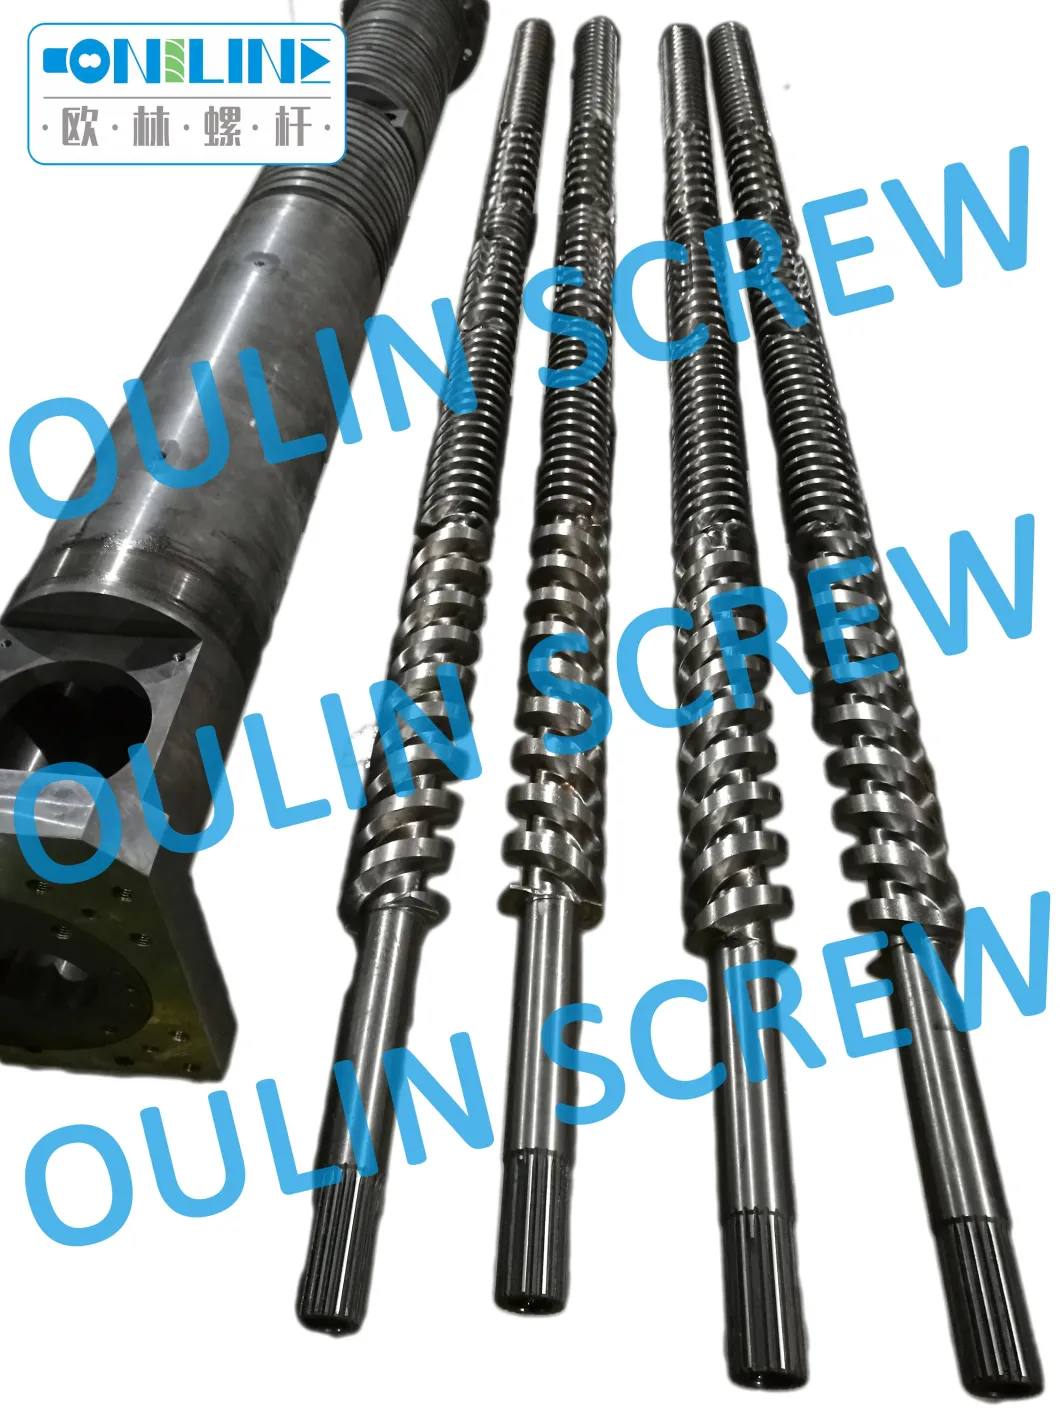 Theysohn 88-26 Bimetallic Twin Parallel Screw and Barrel for PVC Pipe